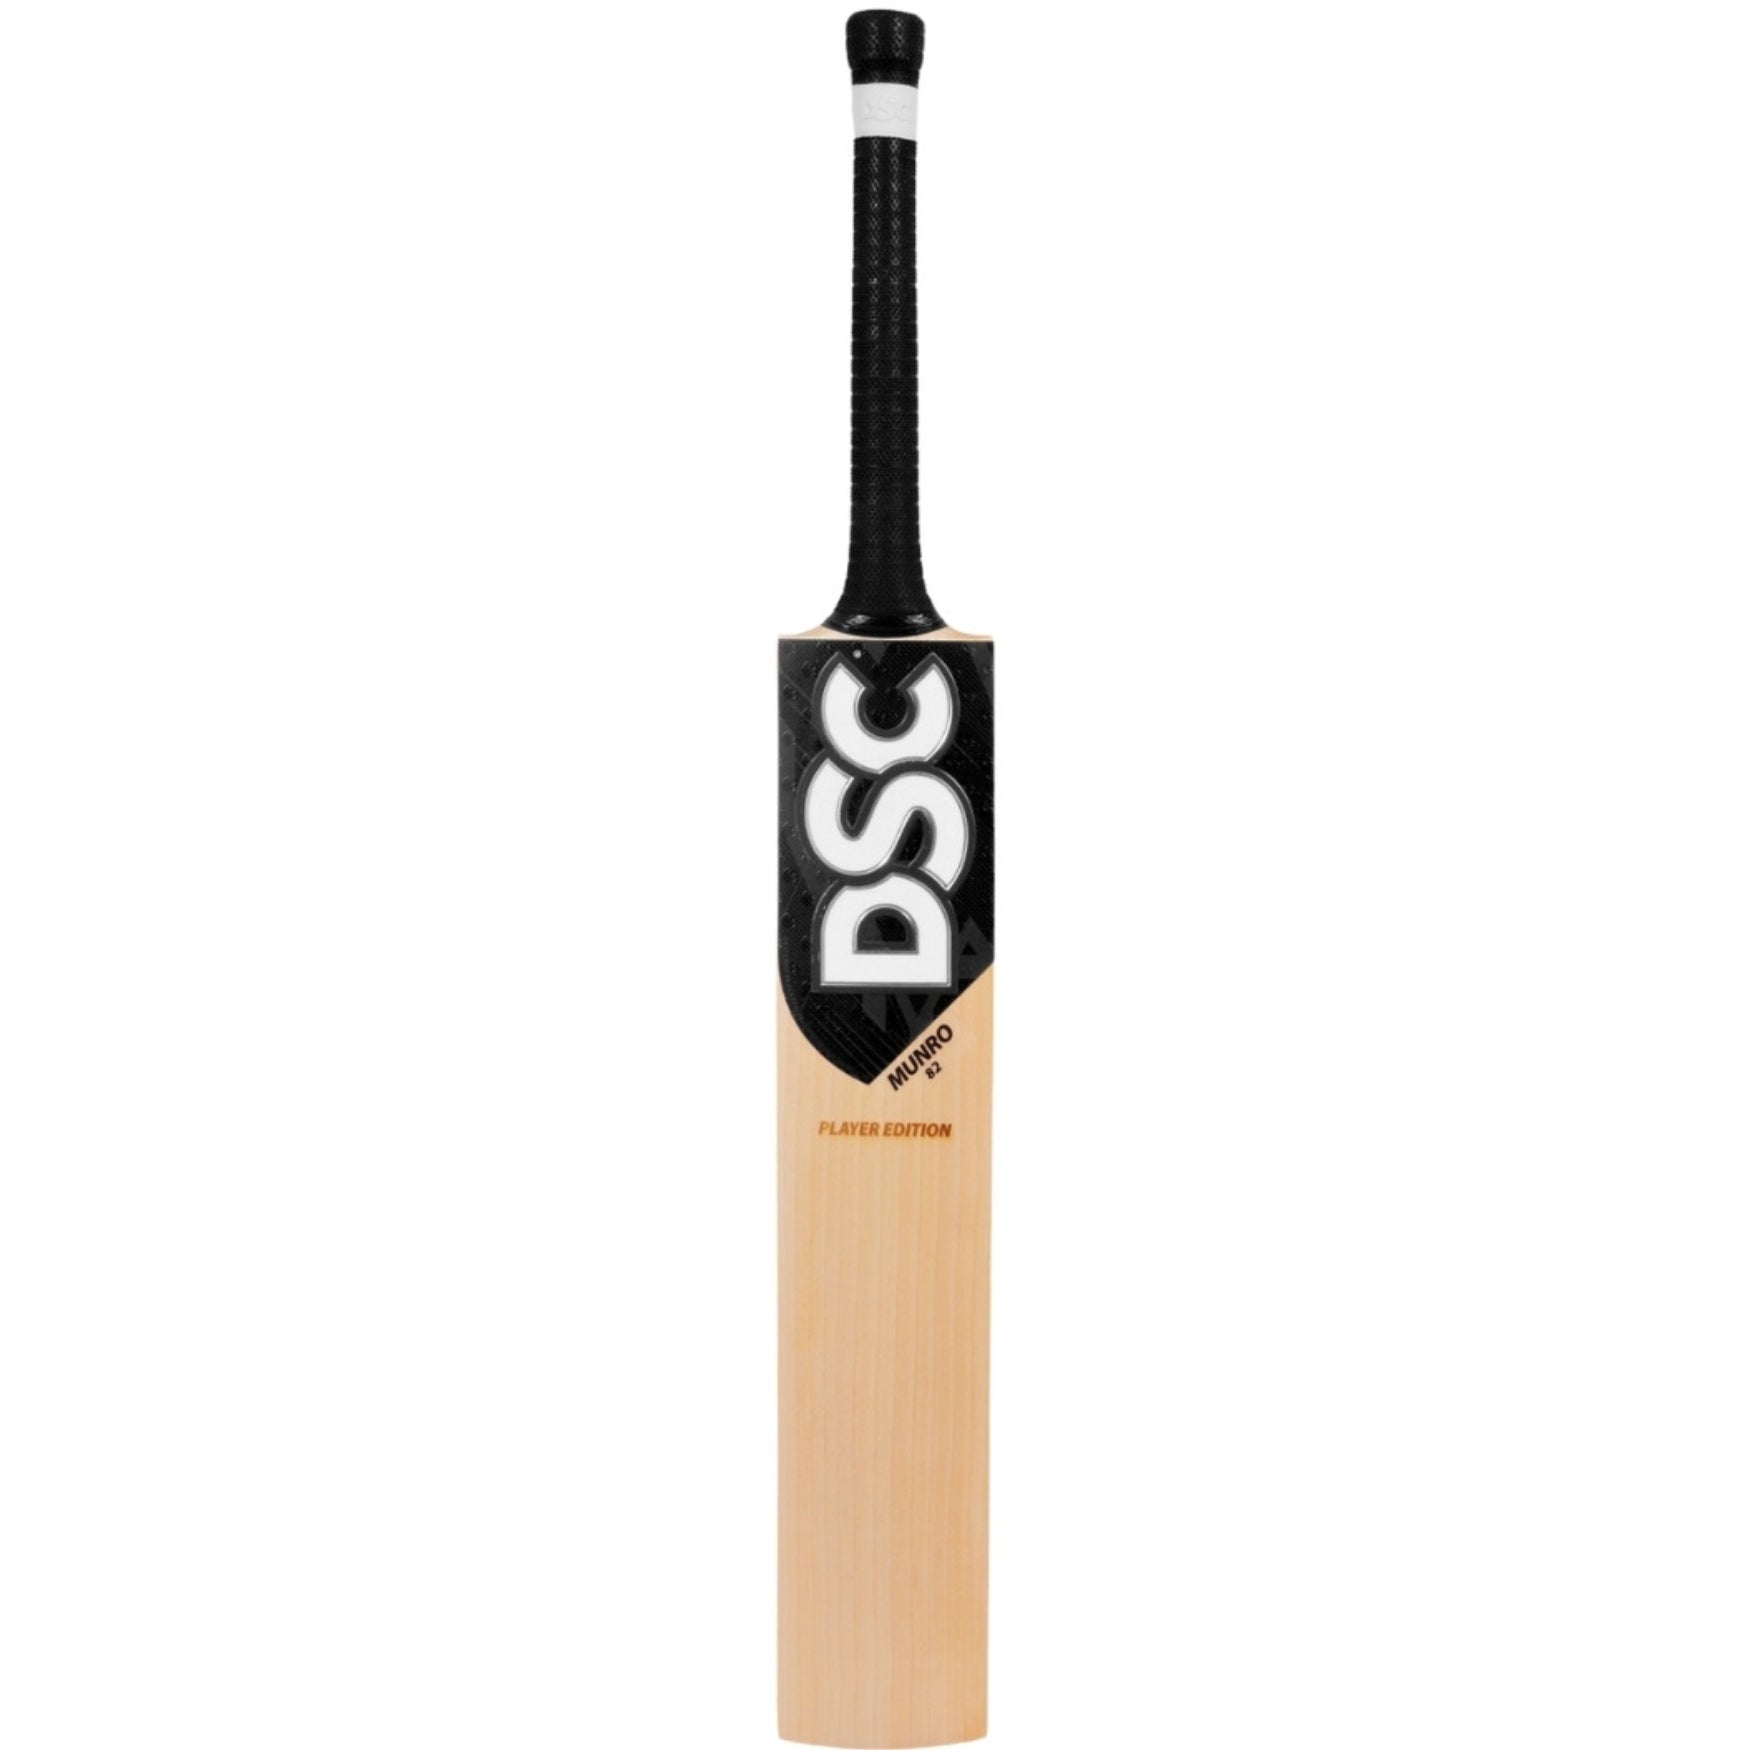 DSC Blak 40 Harrow Cricket Bat